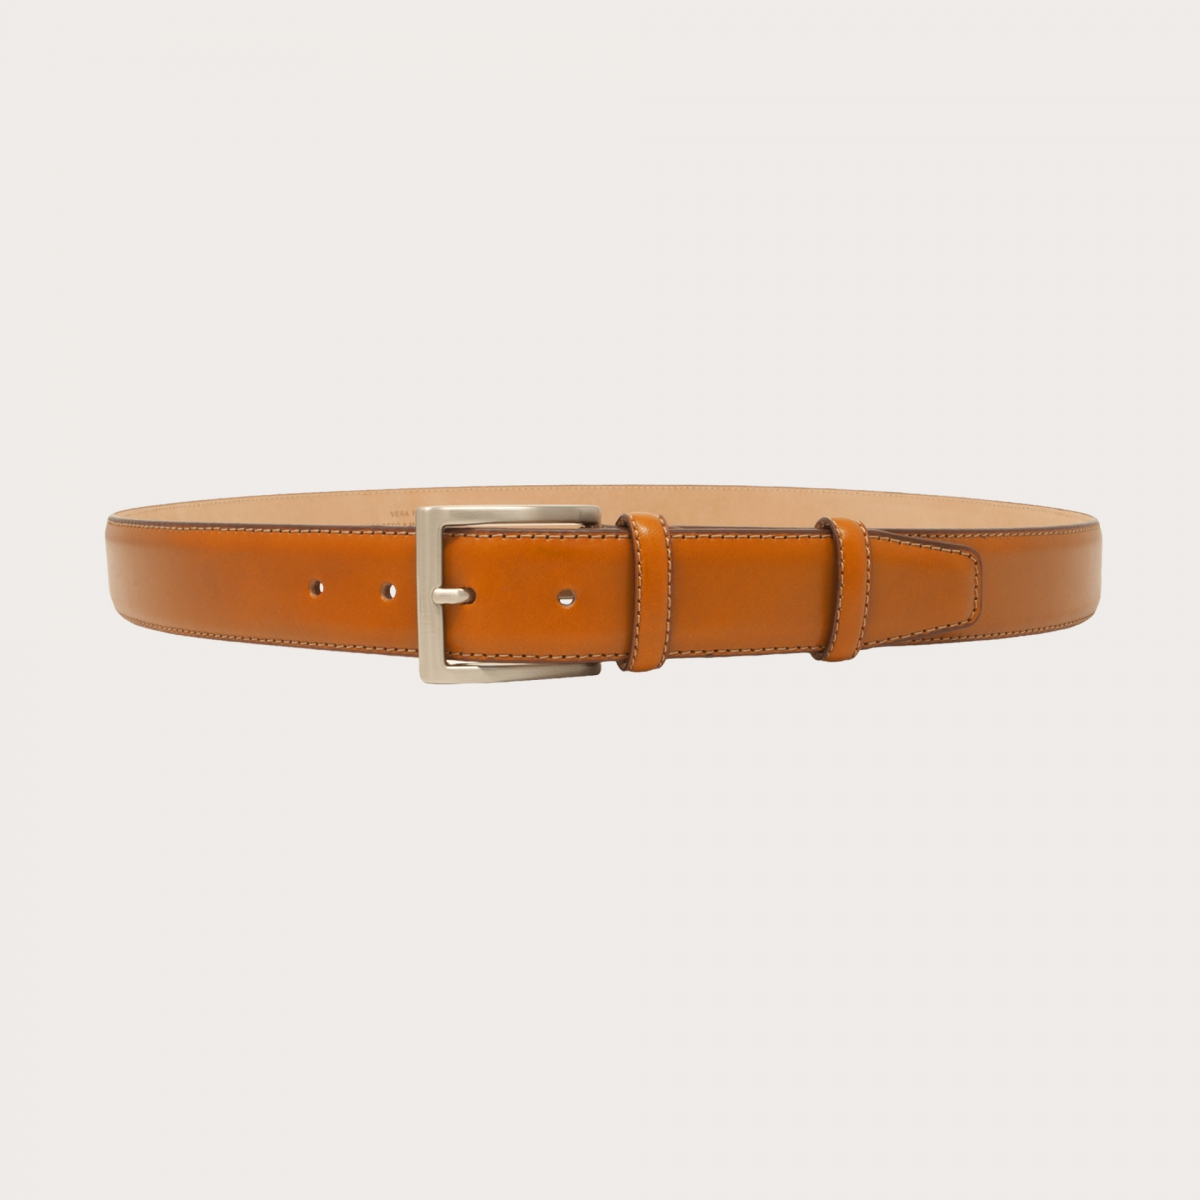 Leather belt, cinnamon brown